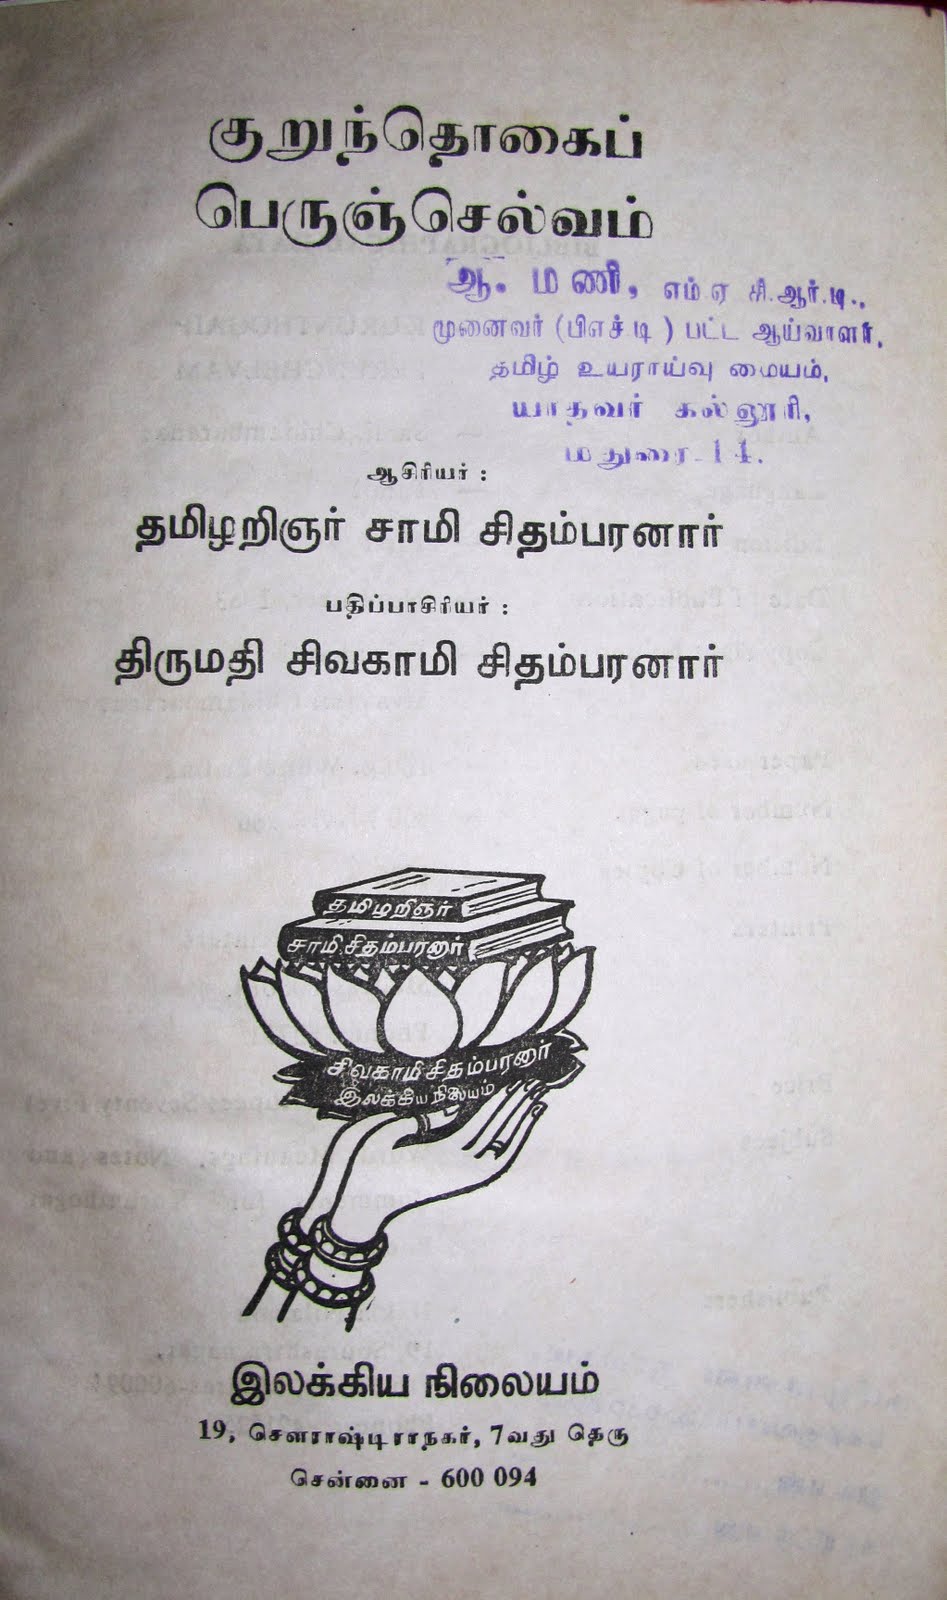 Tamil Meaning of Clutches - இறுகப்பற்றும் கைகள் கொடும்பிடி.